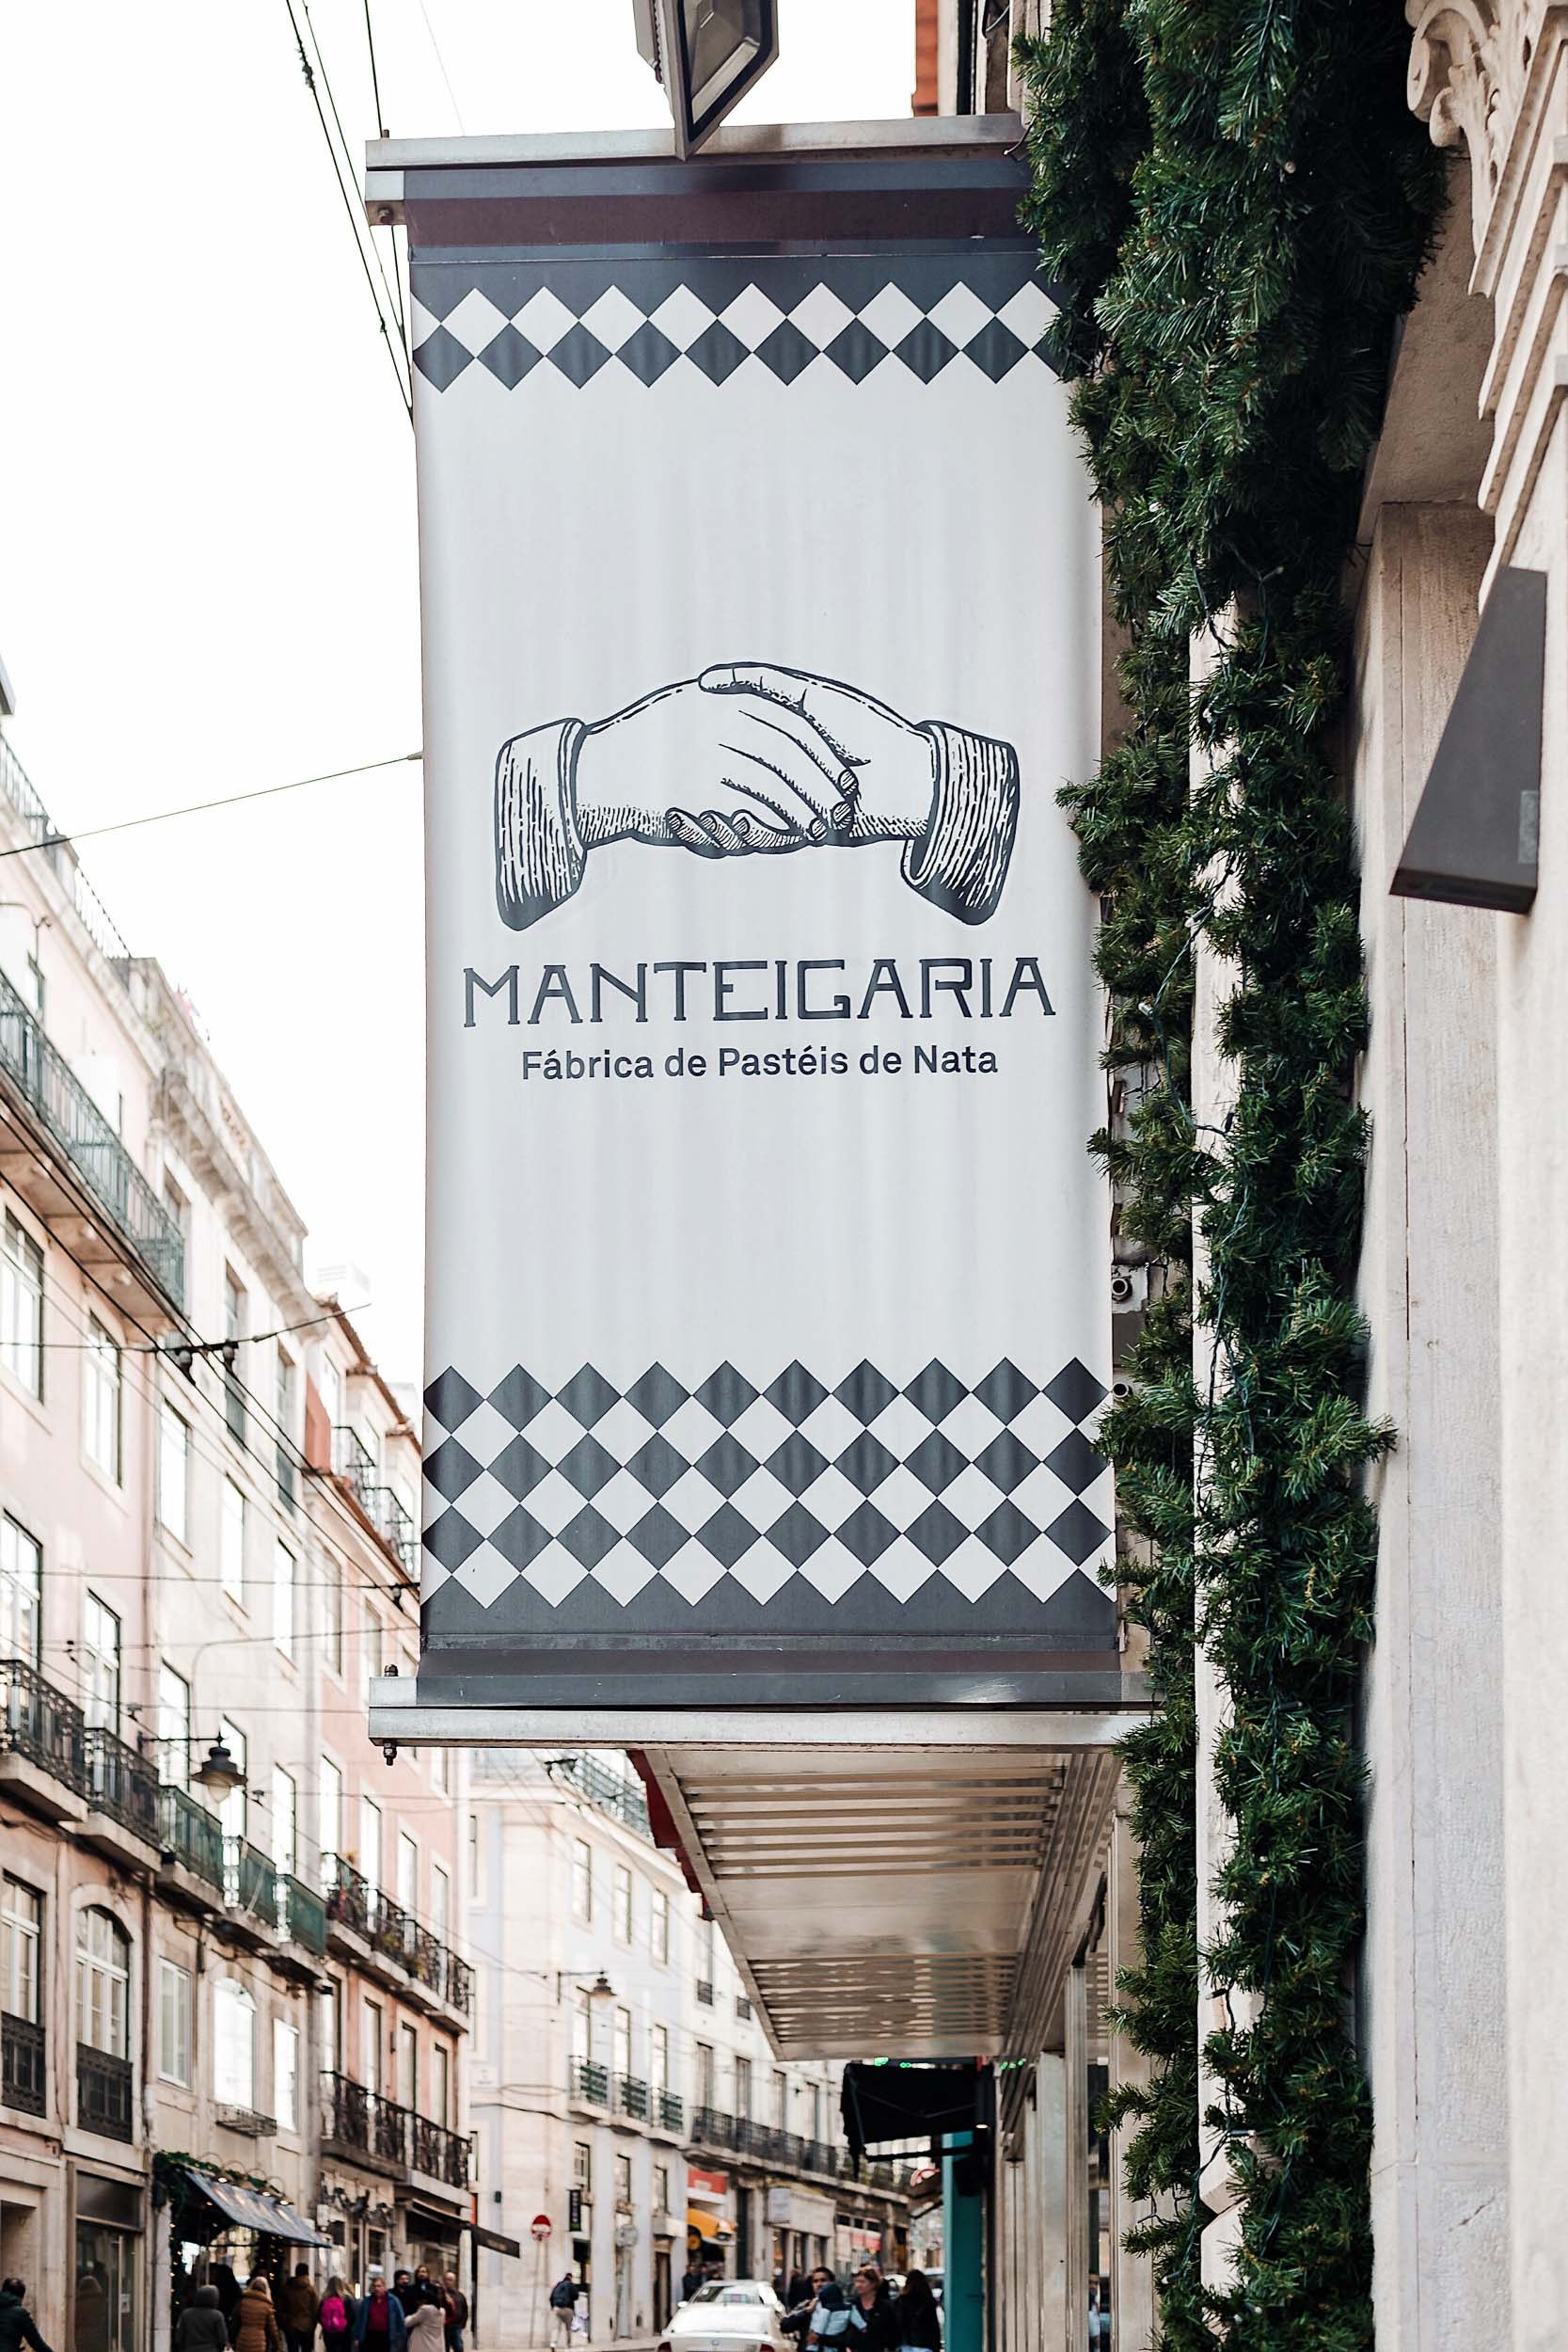 Manteigaria in Lisbon is famous for it's pastel de nata!  Don't miss it